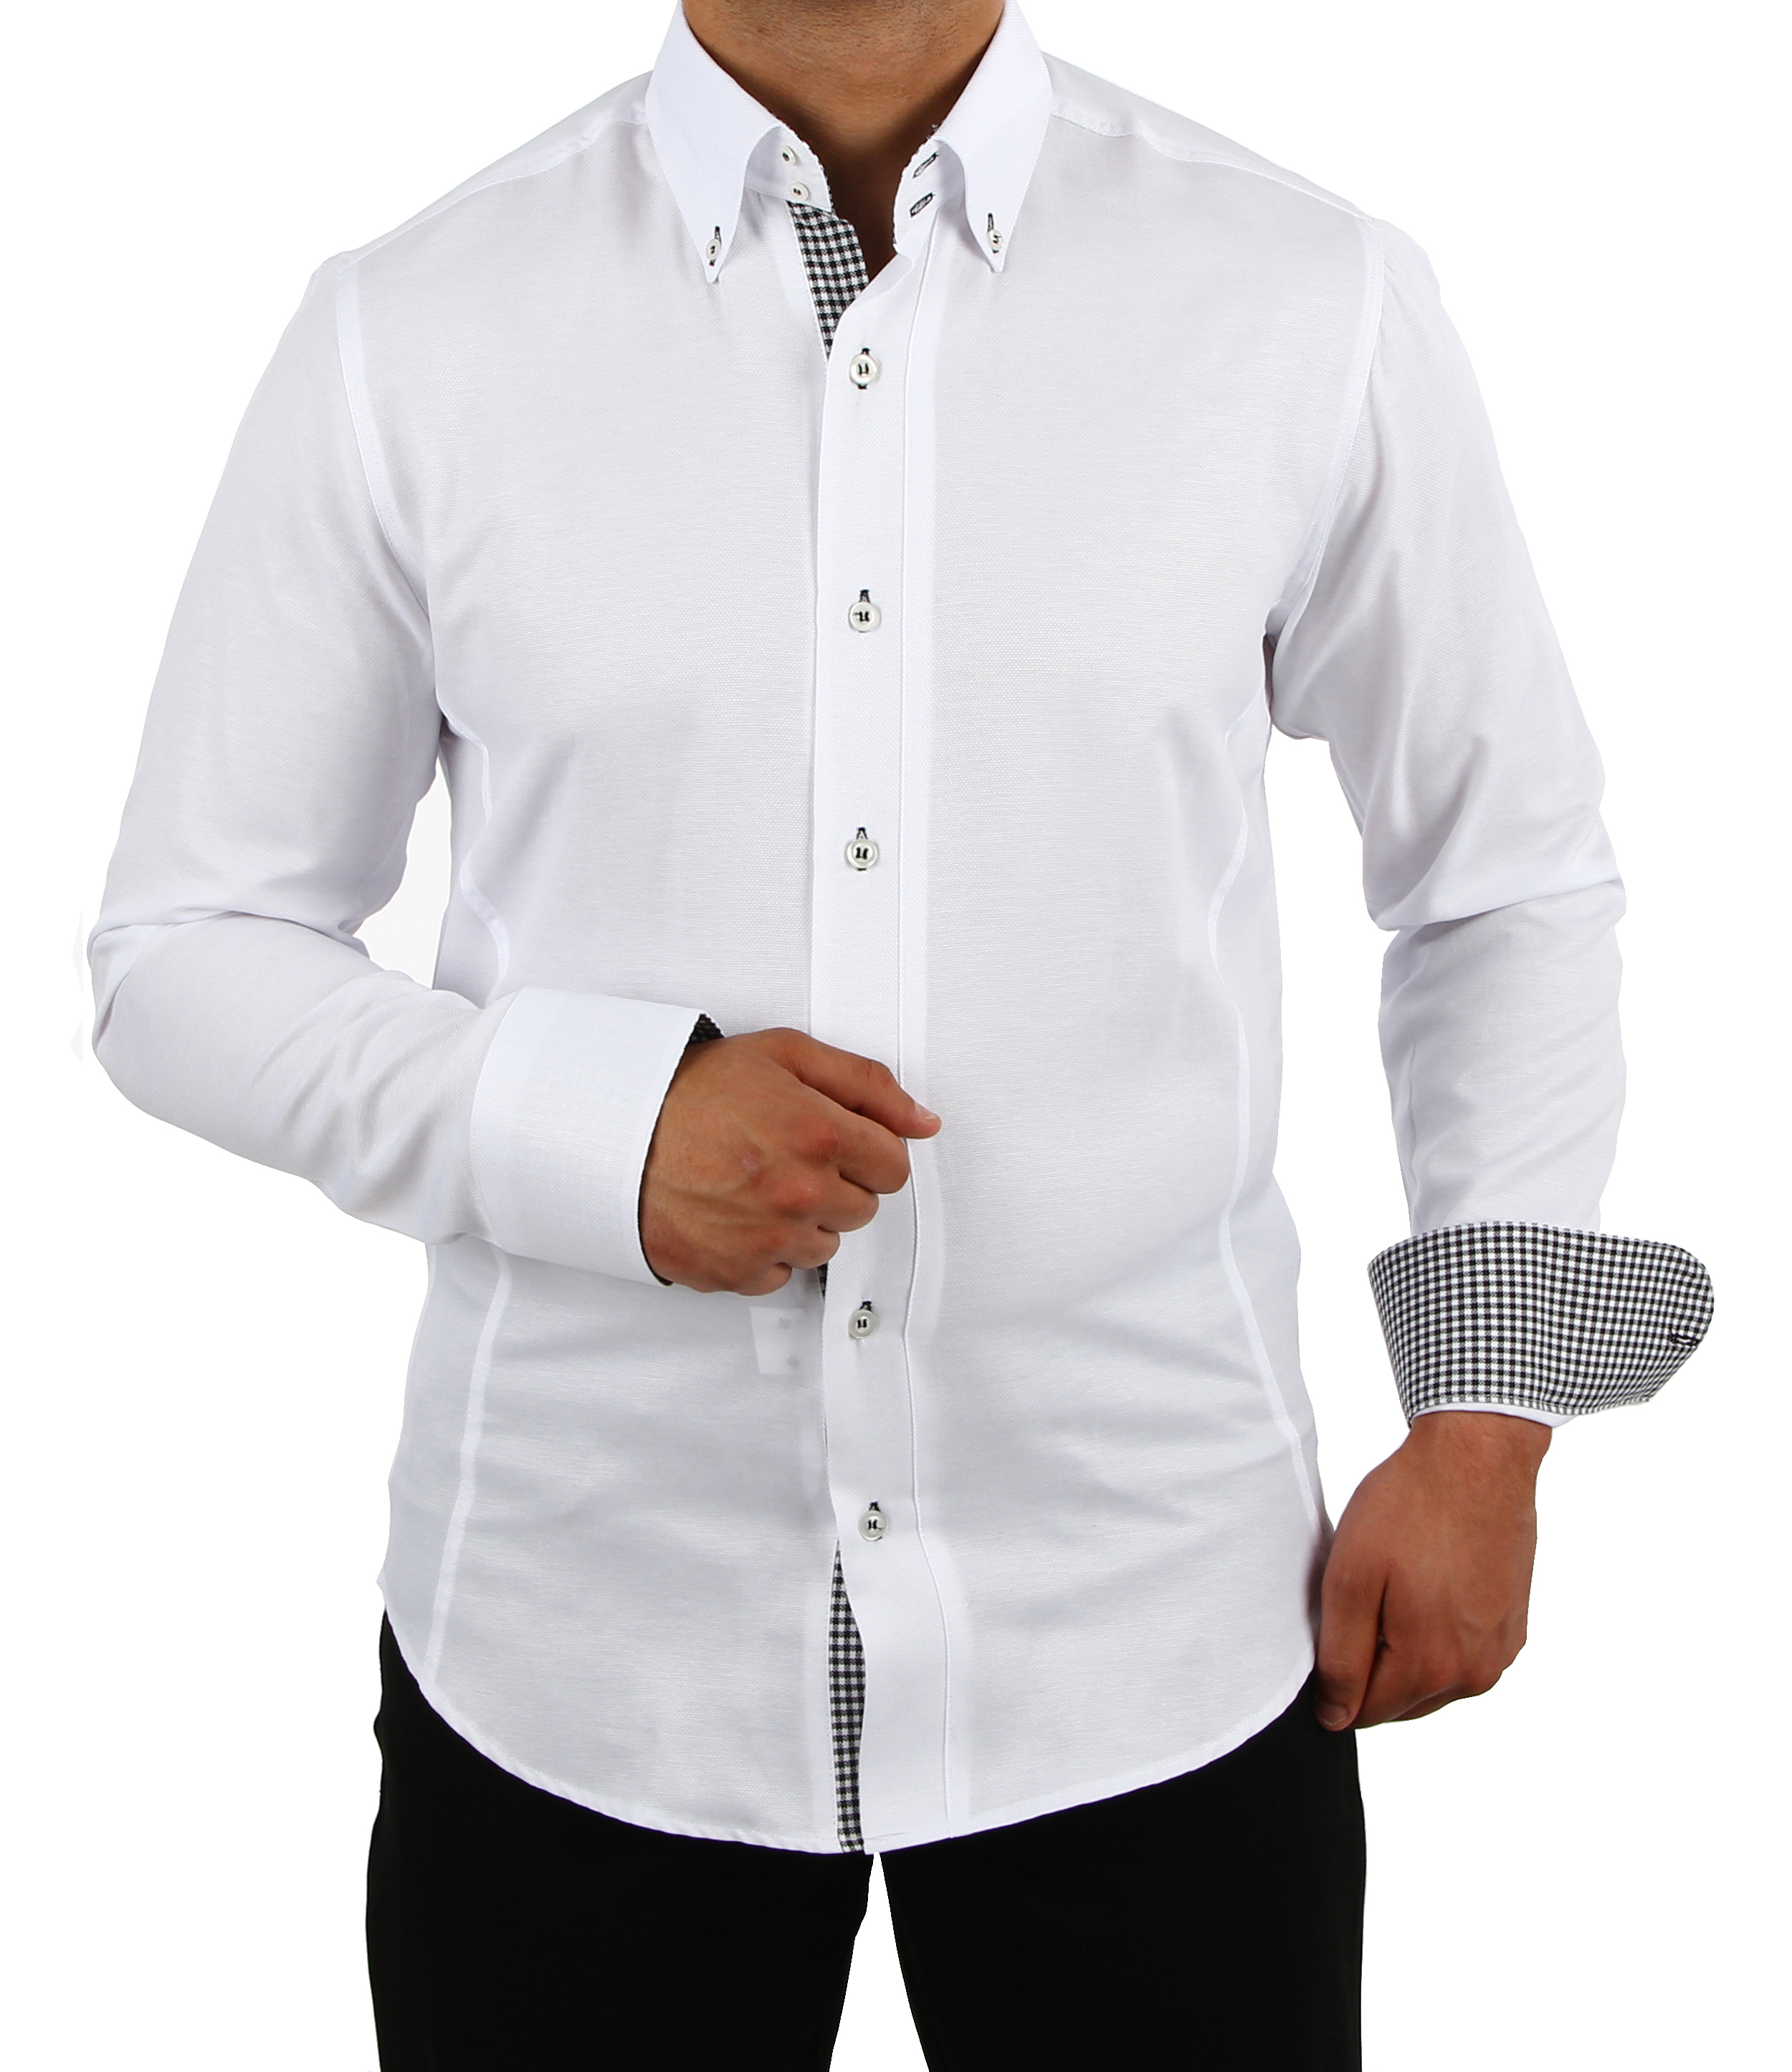 H K Mandel - Business-casual shirt, Sport Shirts Polo Shirts Shirts Xs ...